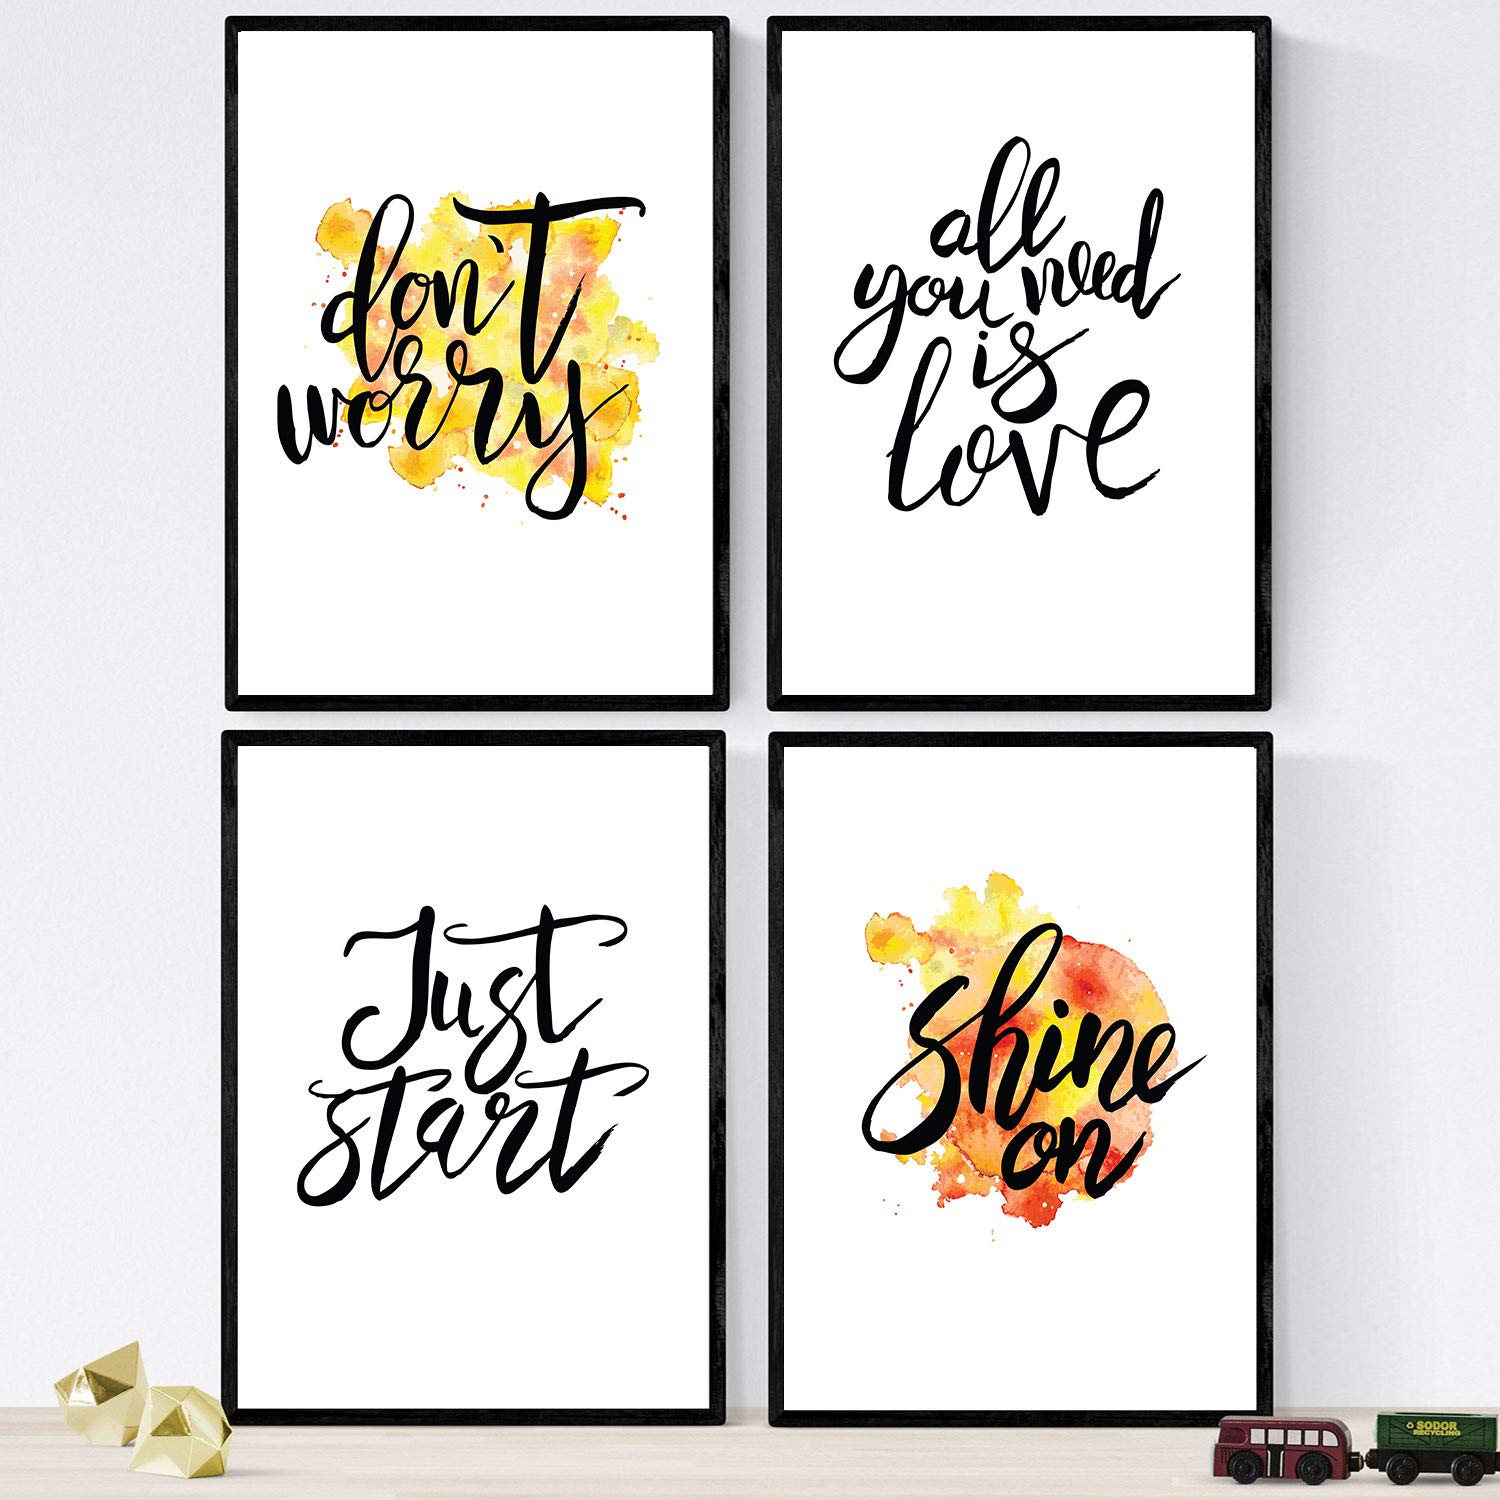 Set de láminas con mensajes felices y coloridos. Pack de posters 'Dont Worry'.-Artwork-Nacnic-Nacnic Estudio SL